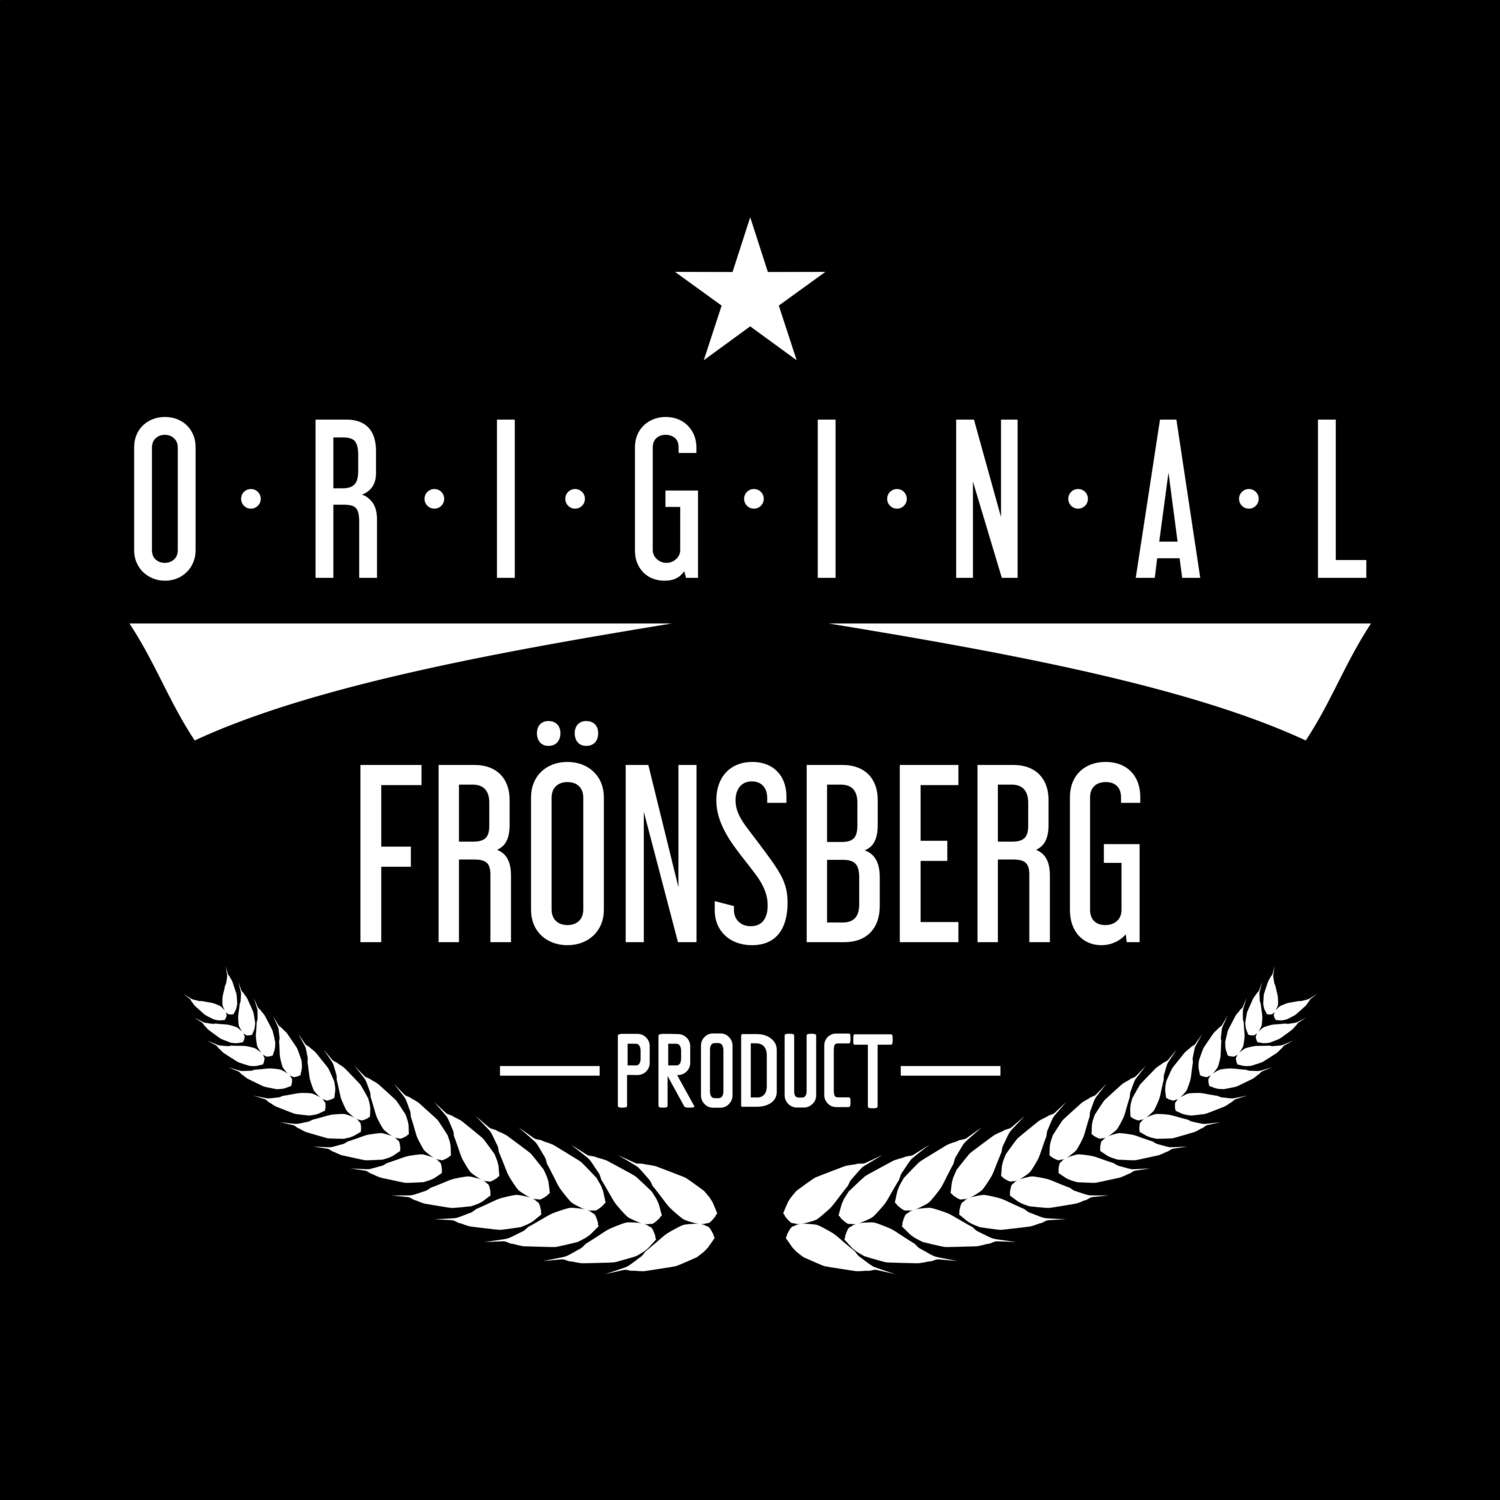 Frönsberg T-Shirt »Original Product«